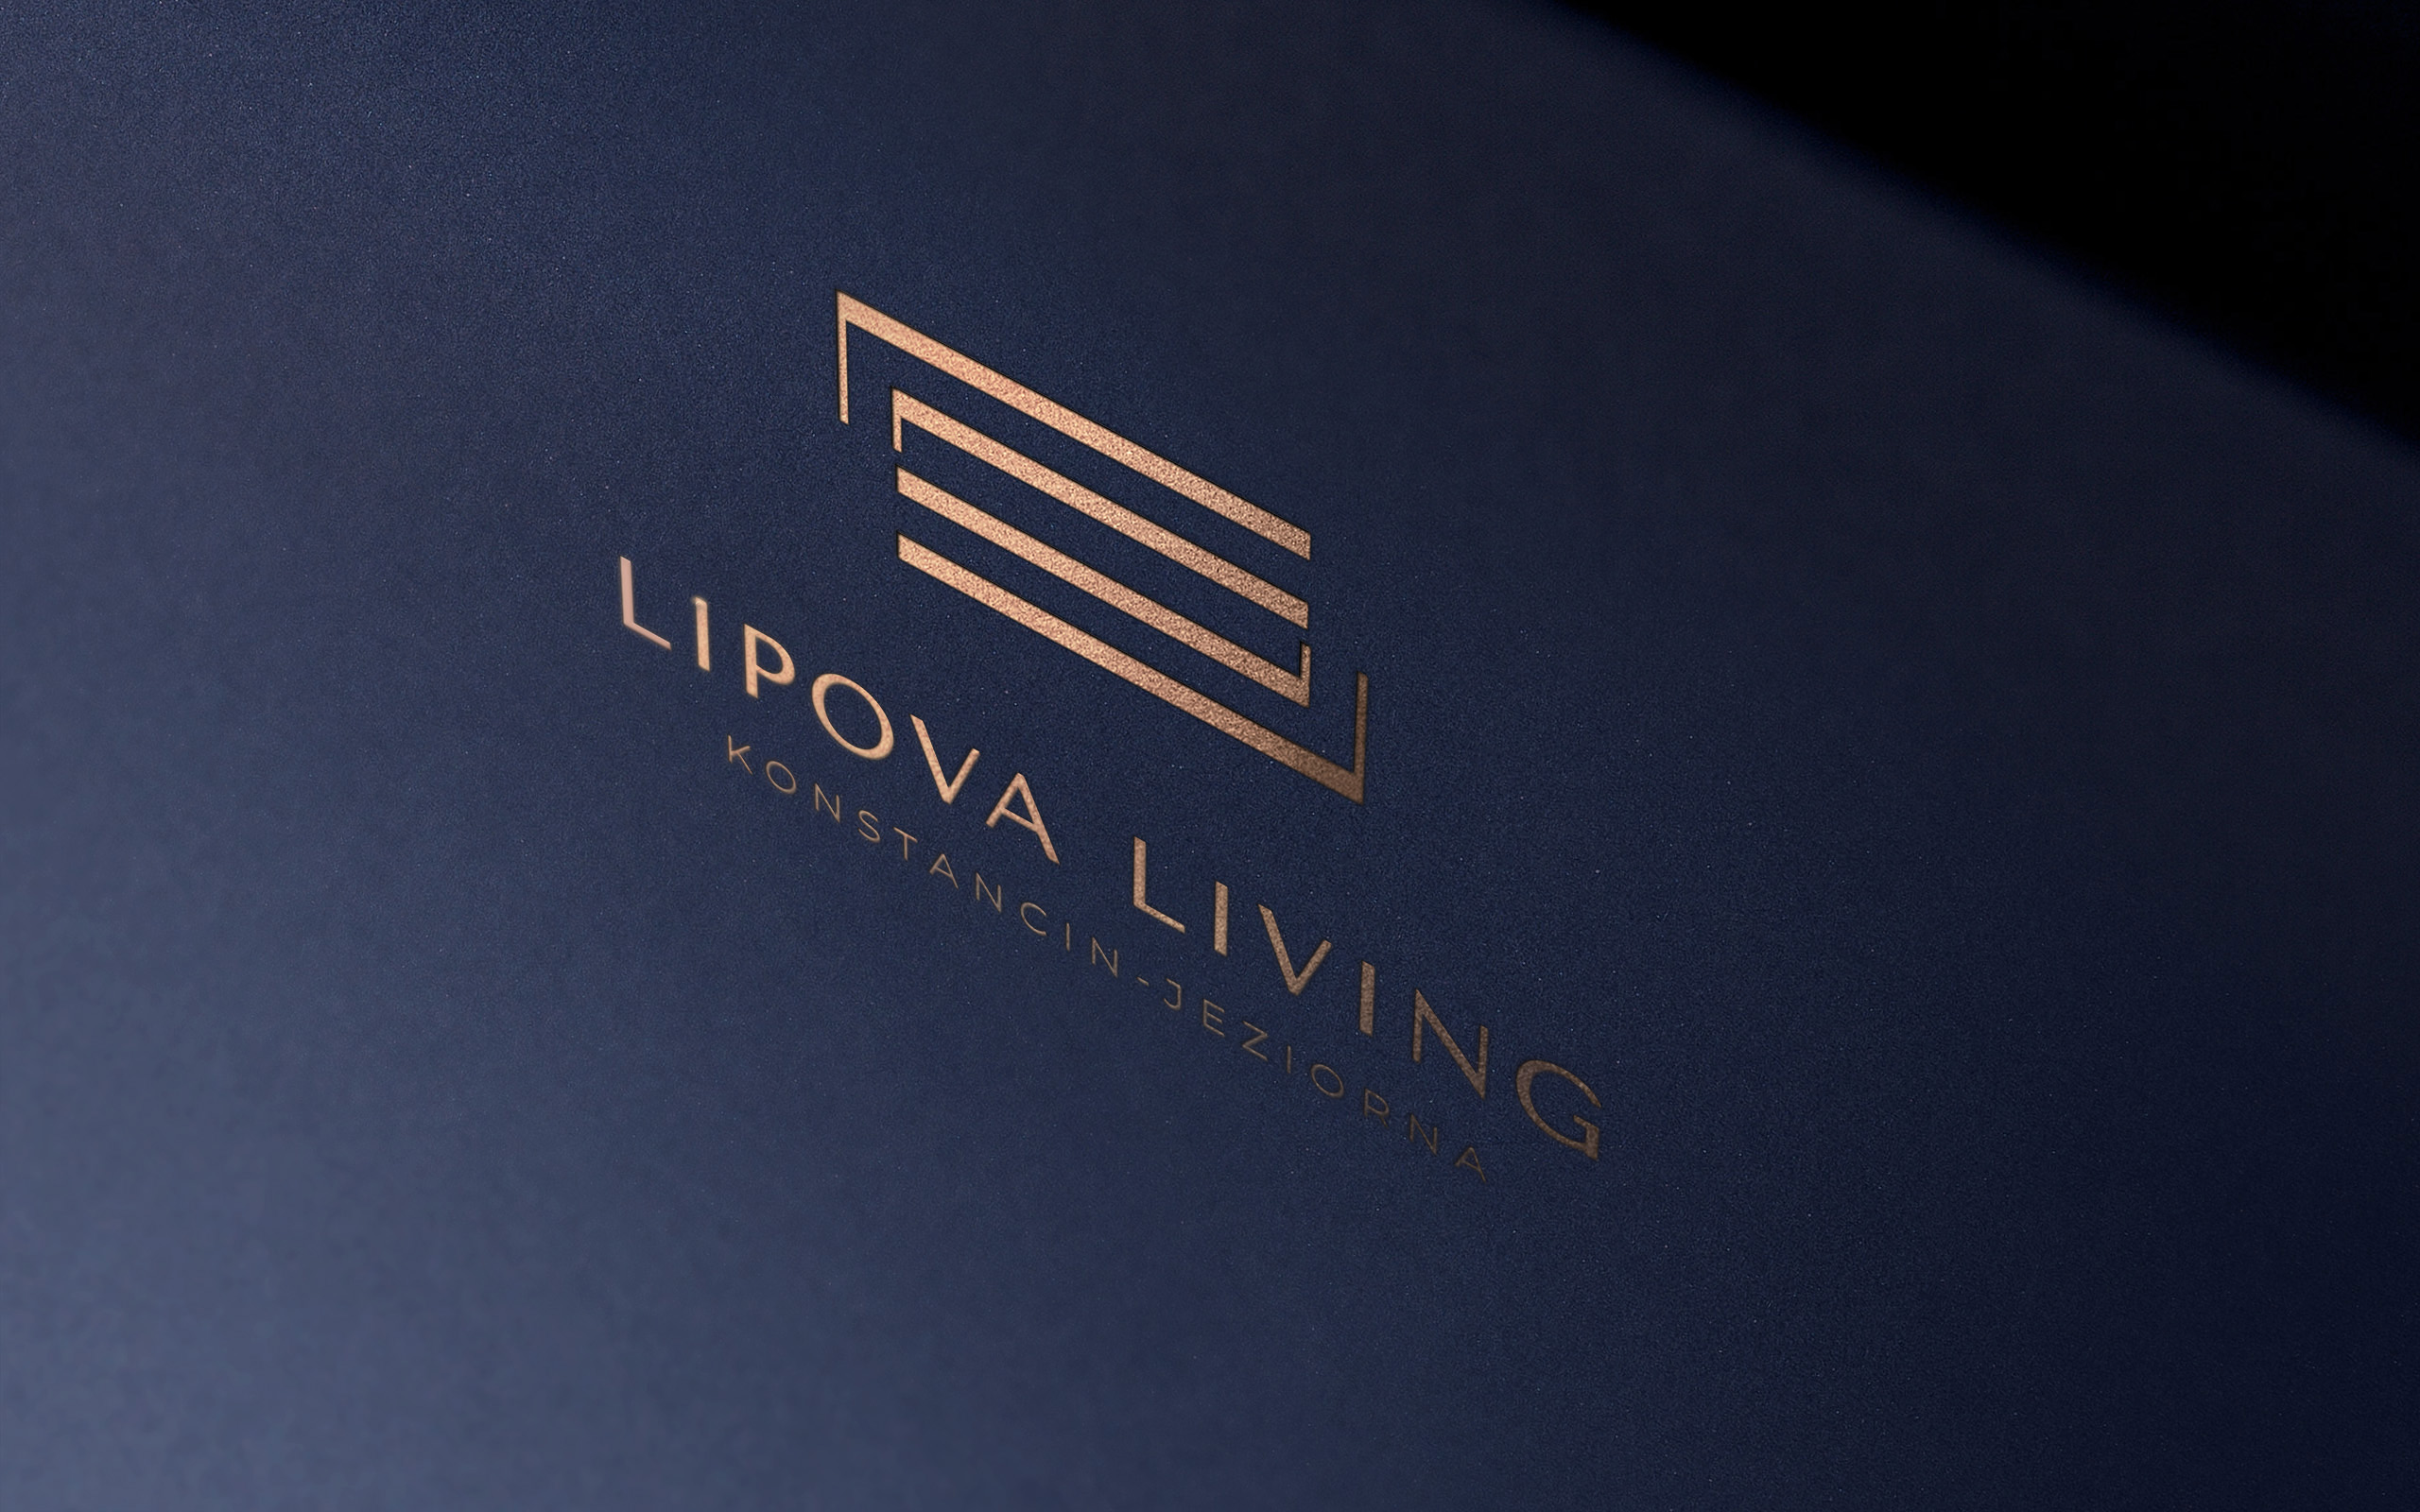 projekt logo dla dewelopera - Warszawa Lipova Living